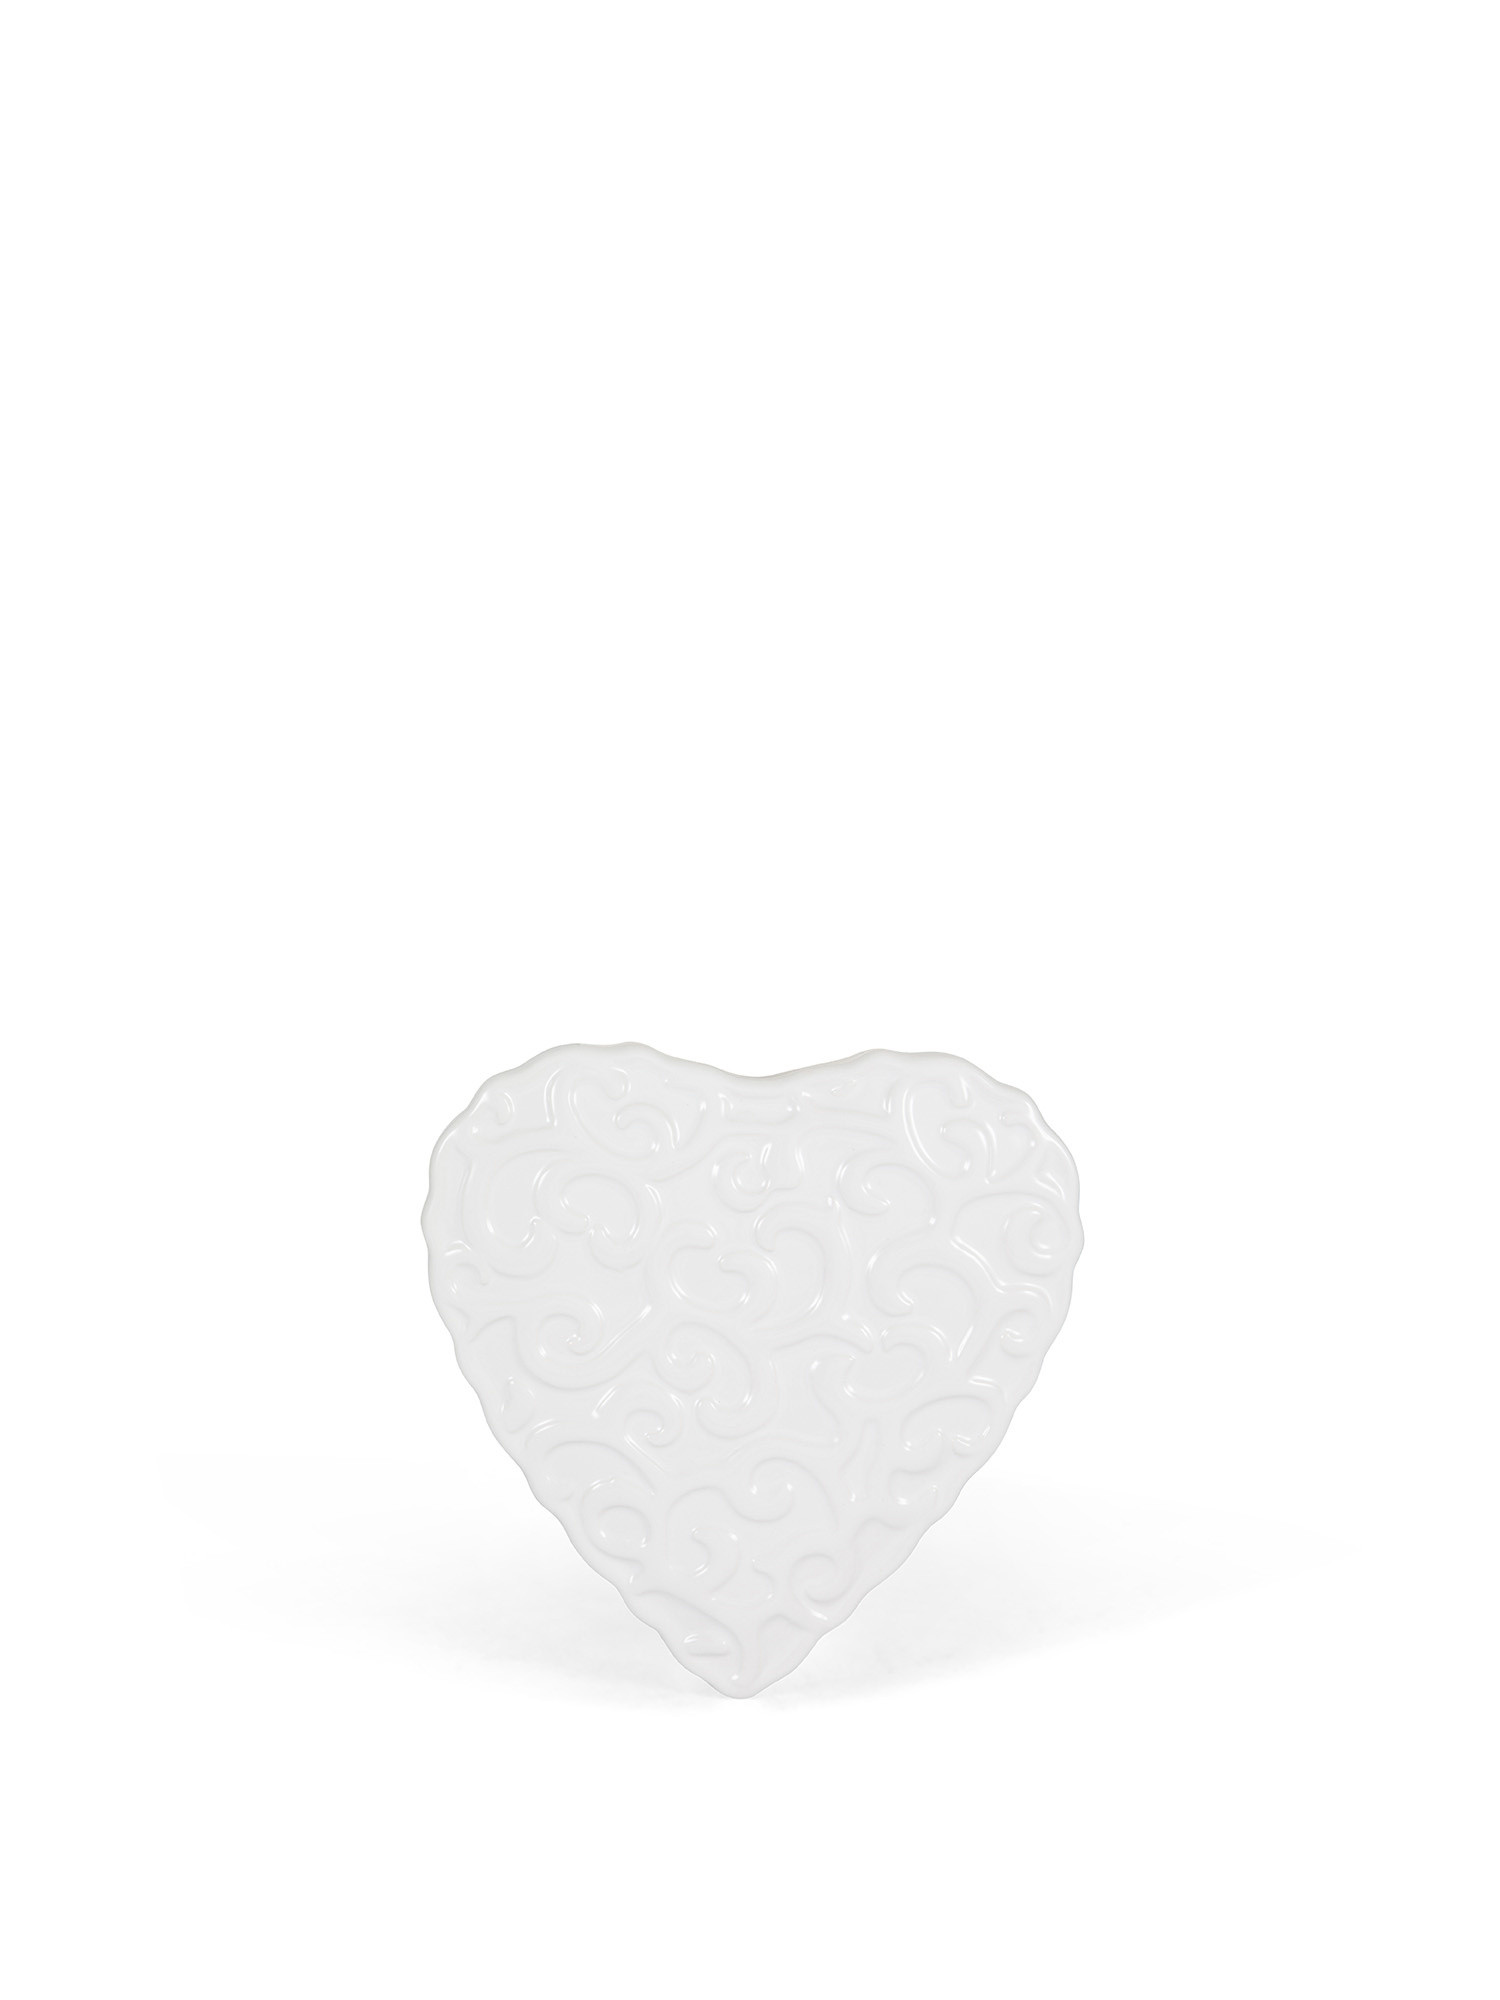 Umidificatore ceramica a cuore decorato, Bianco, large image number 0